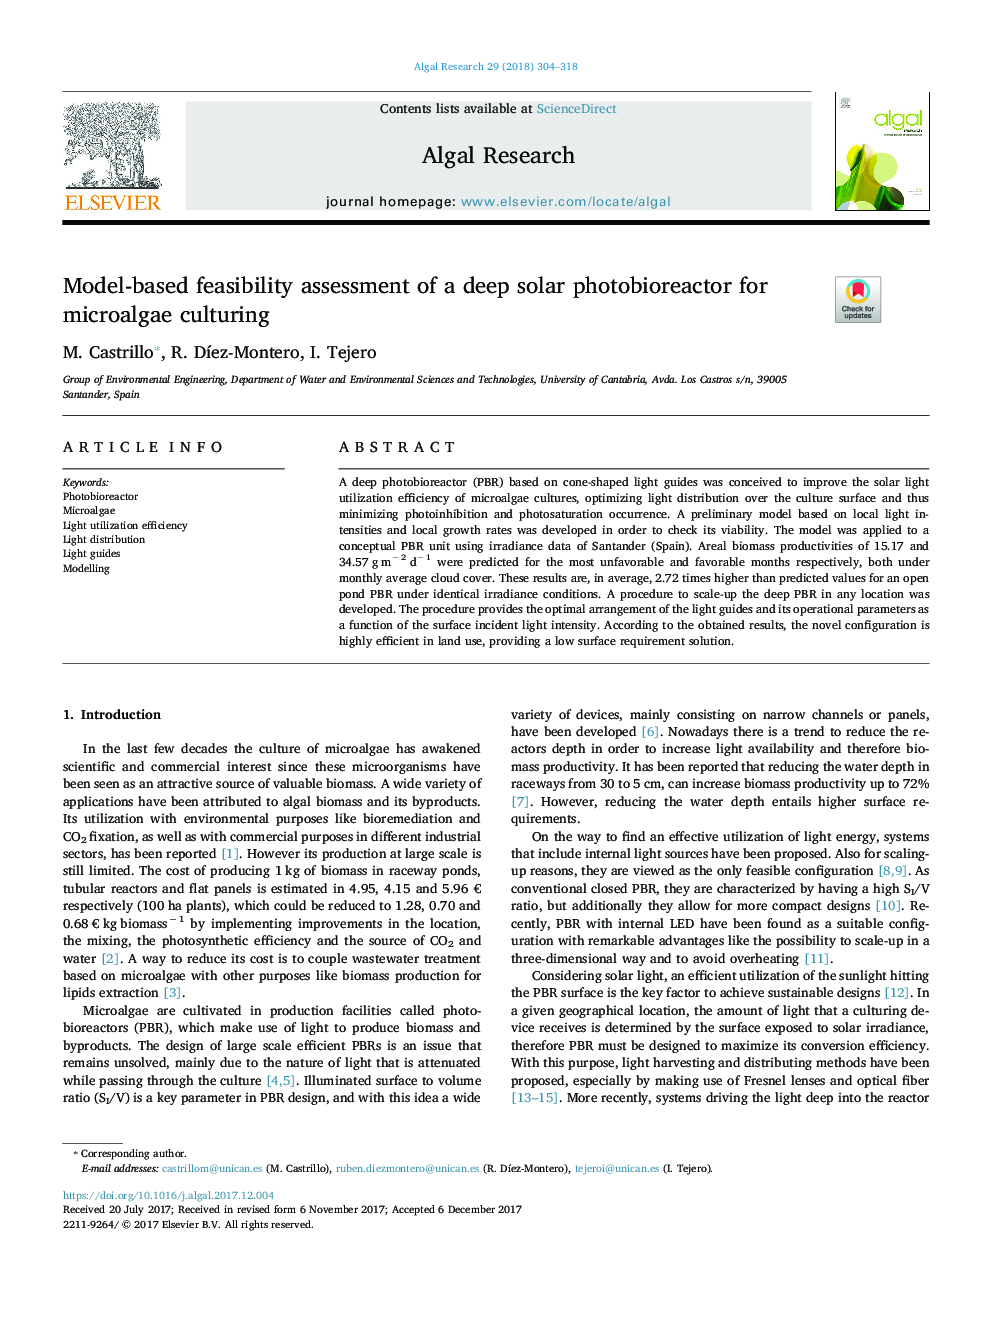 Model-based feasibility assessment of a deep solar photobioreactor for microalgae culturing